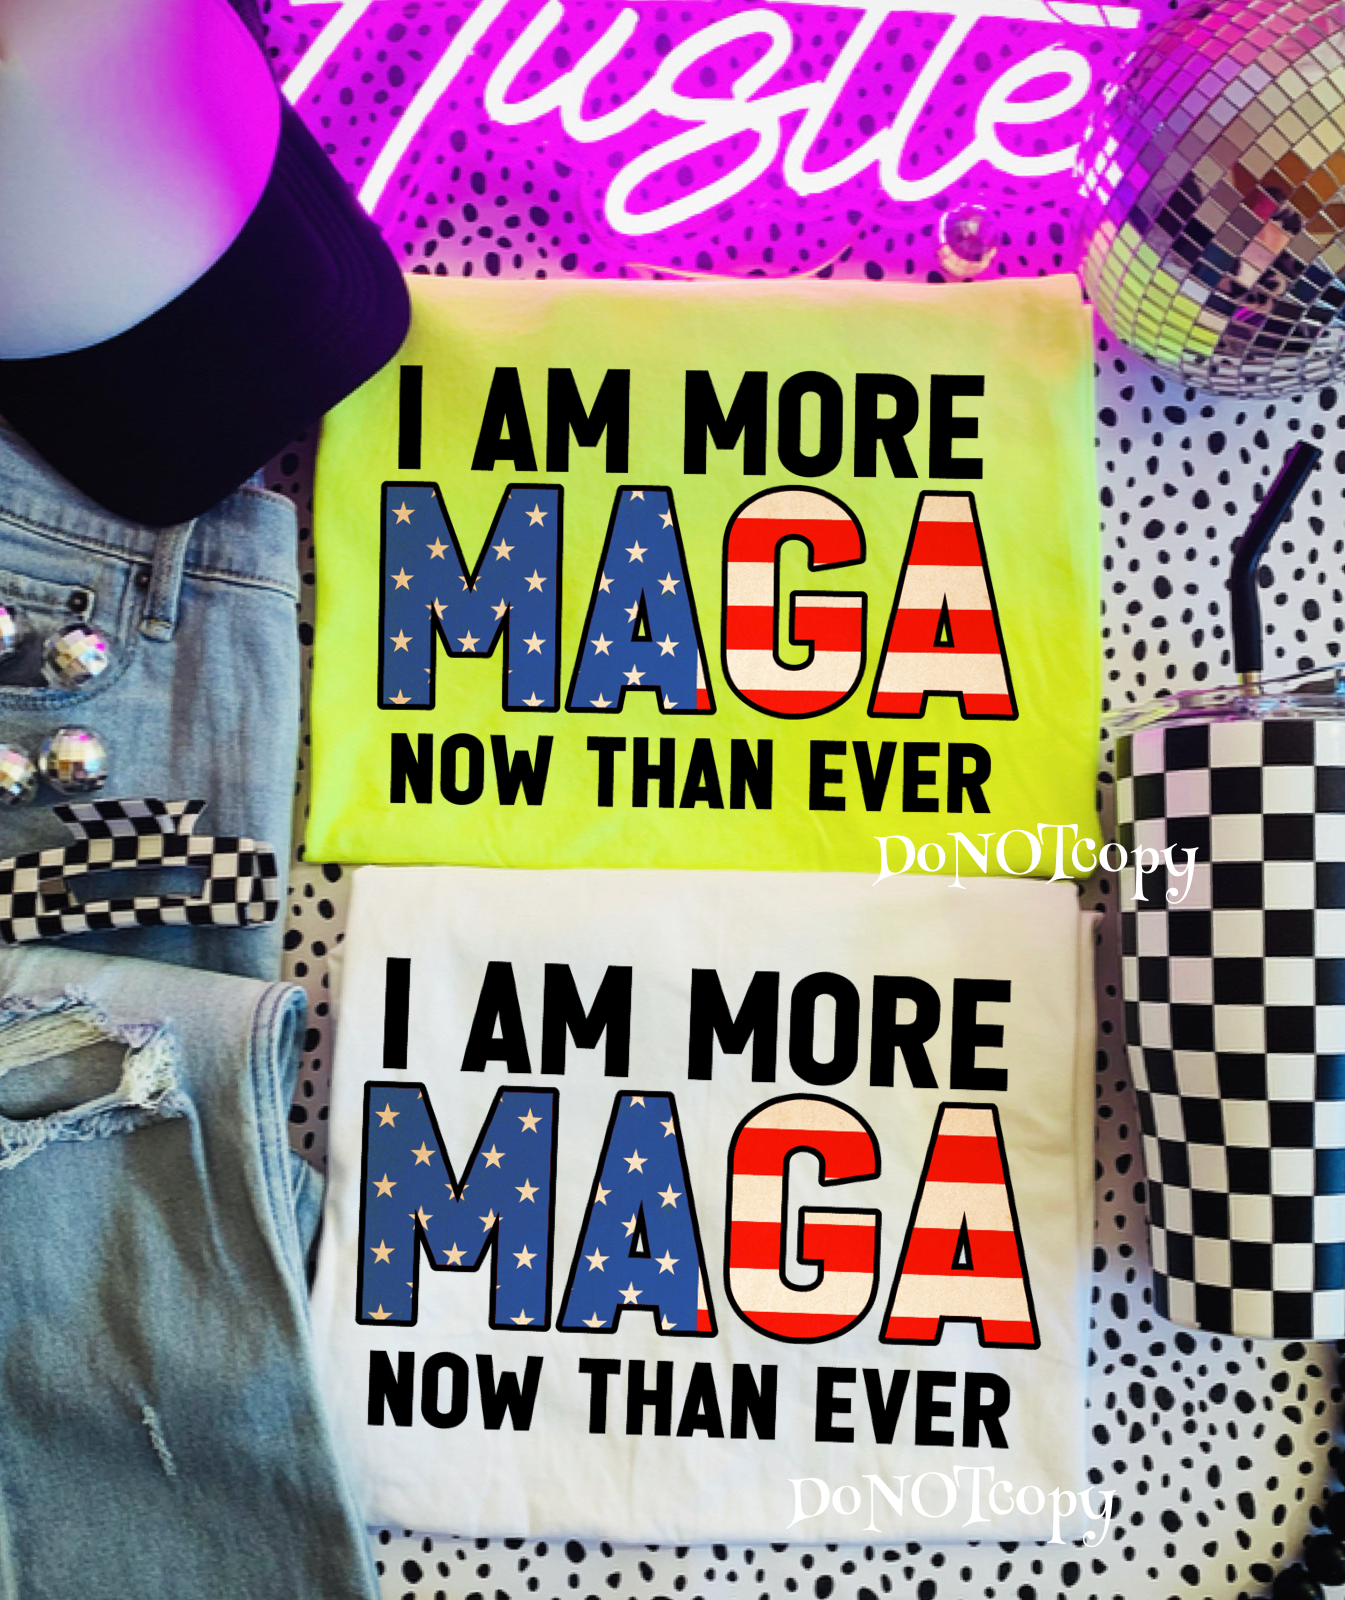 I’m more MAGA now than ever